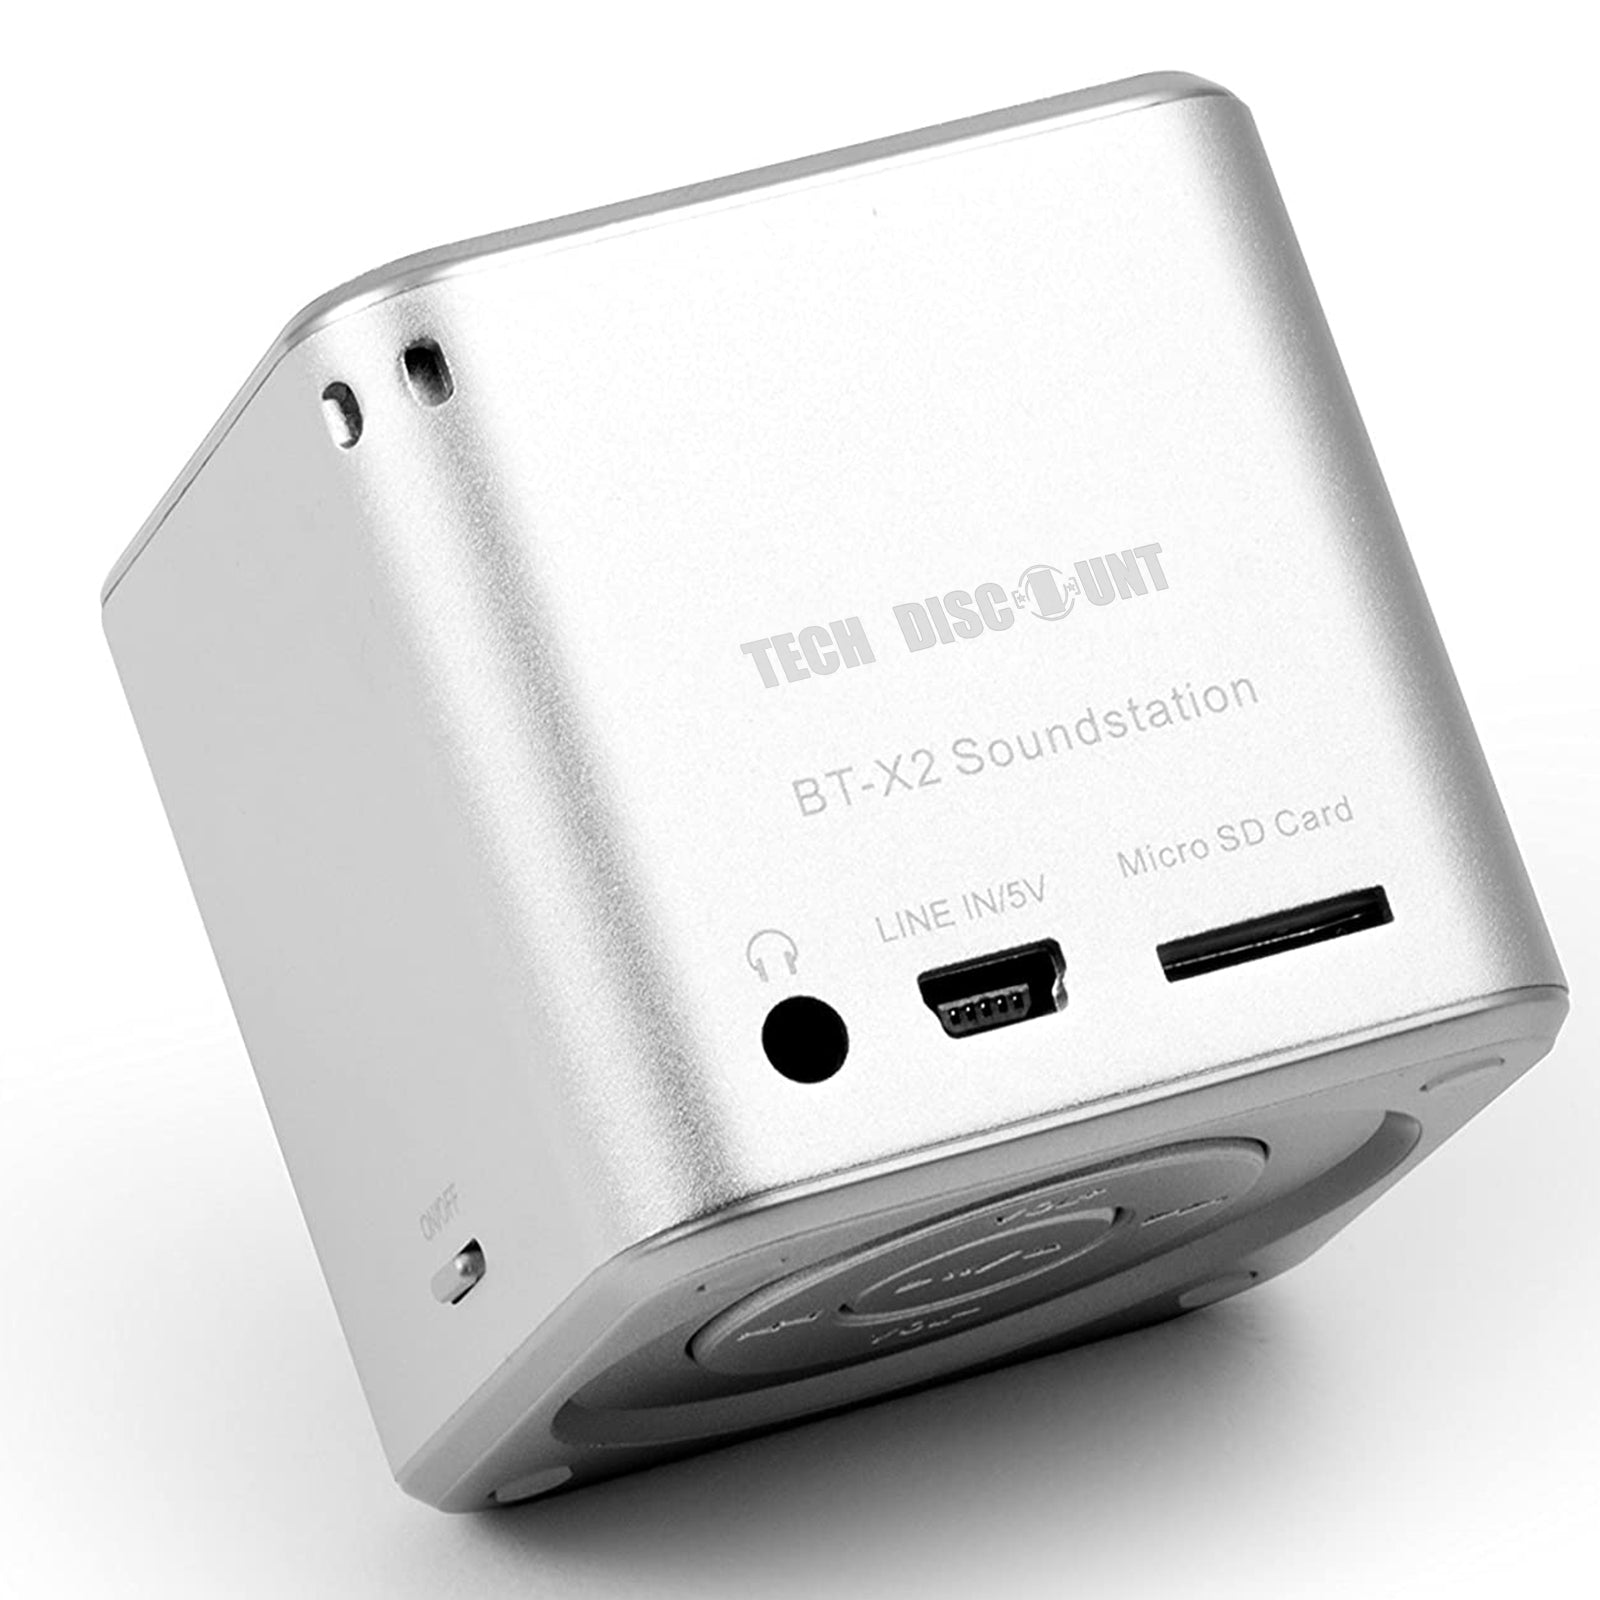 TD® videoprojecteur telephone portable full hd led mini batterie pas c –